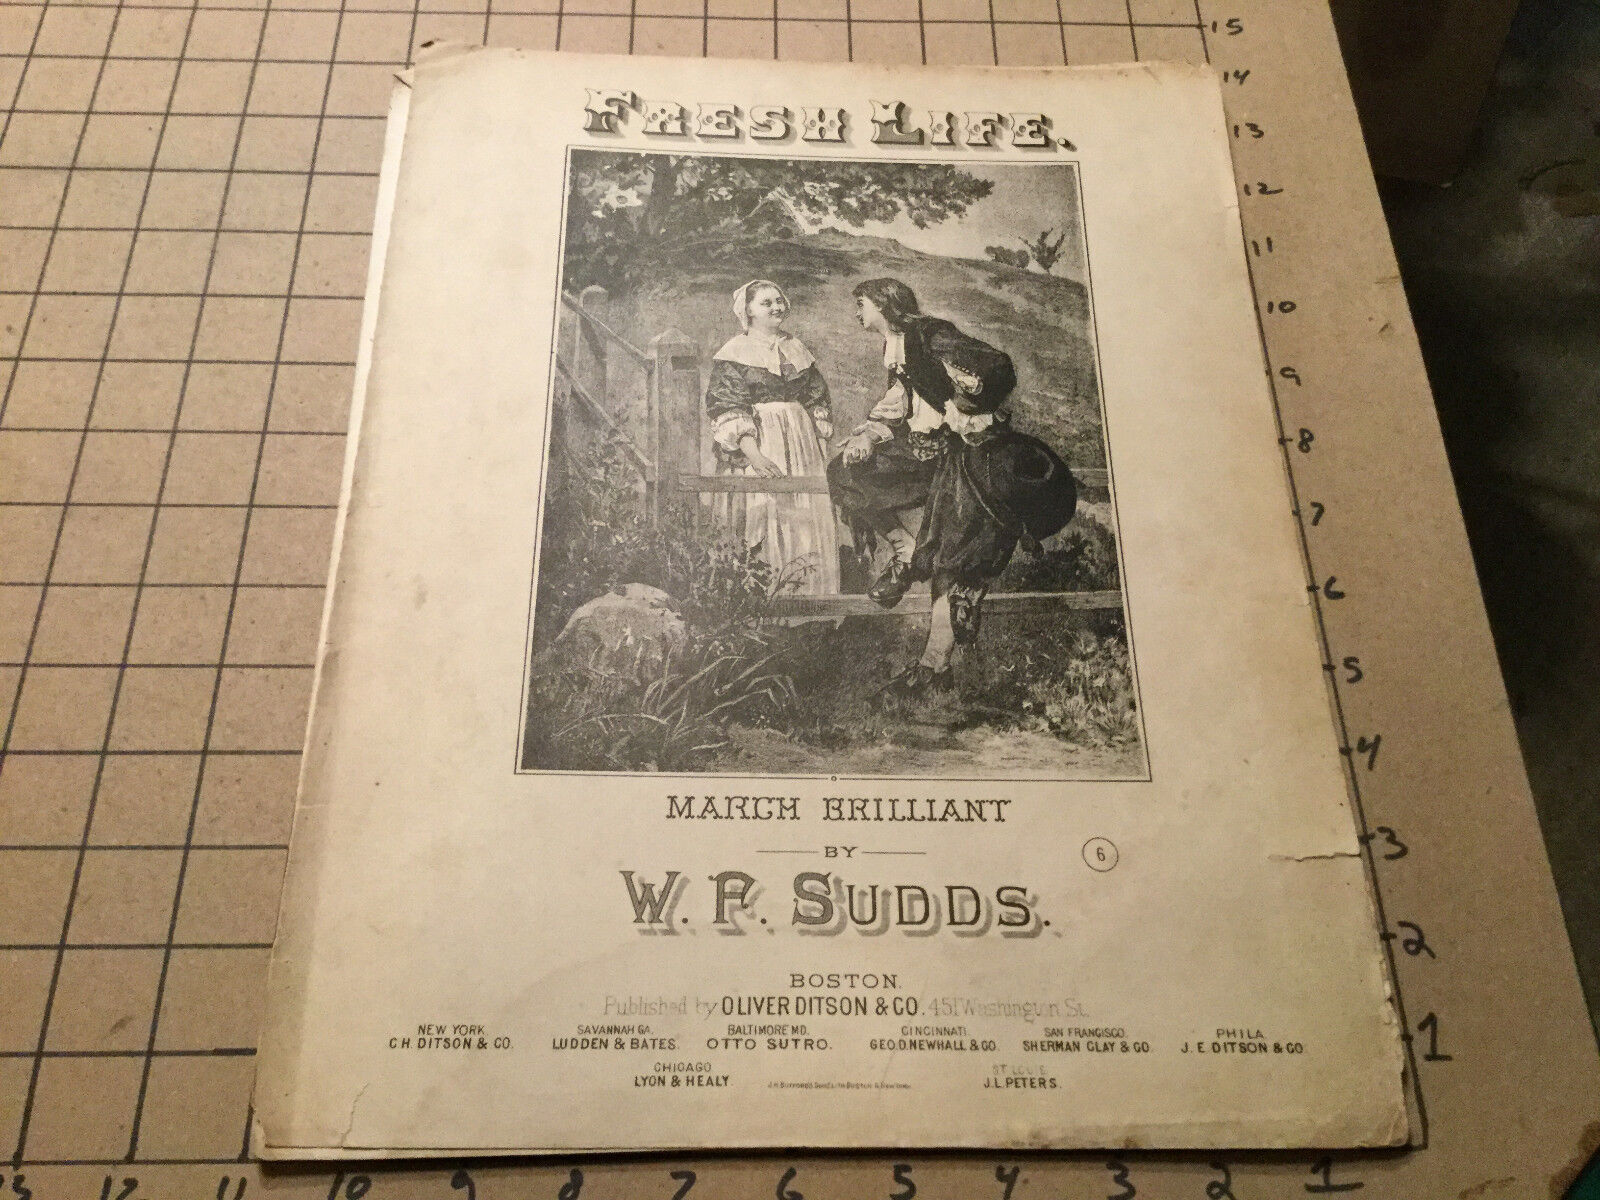 original vintage sheet music -- 1876 FRESH LIFE march brilliant by W F SUDDS 